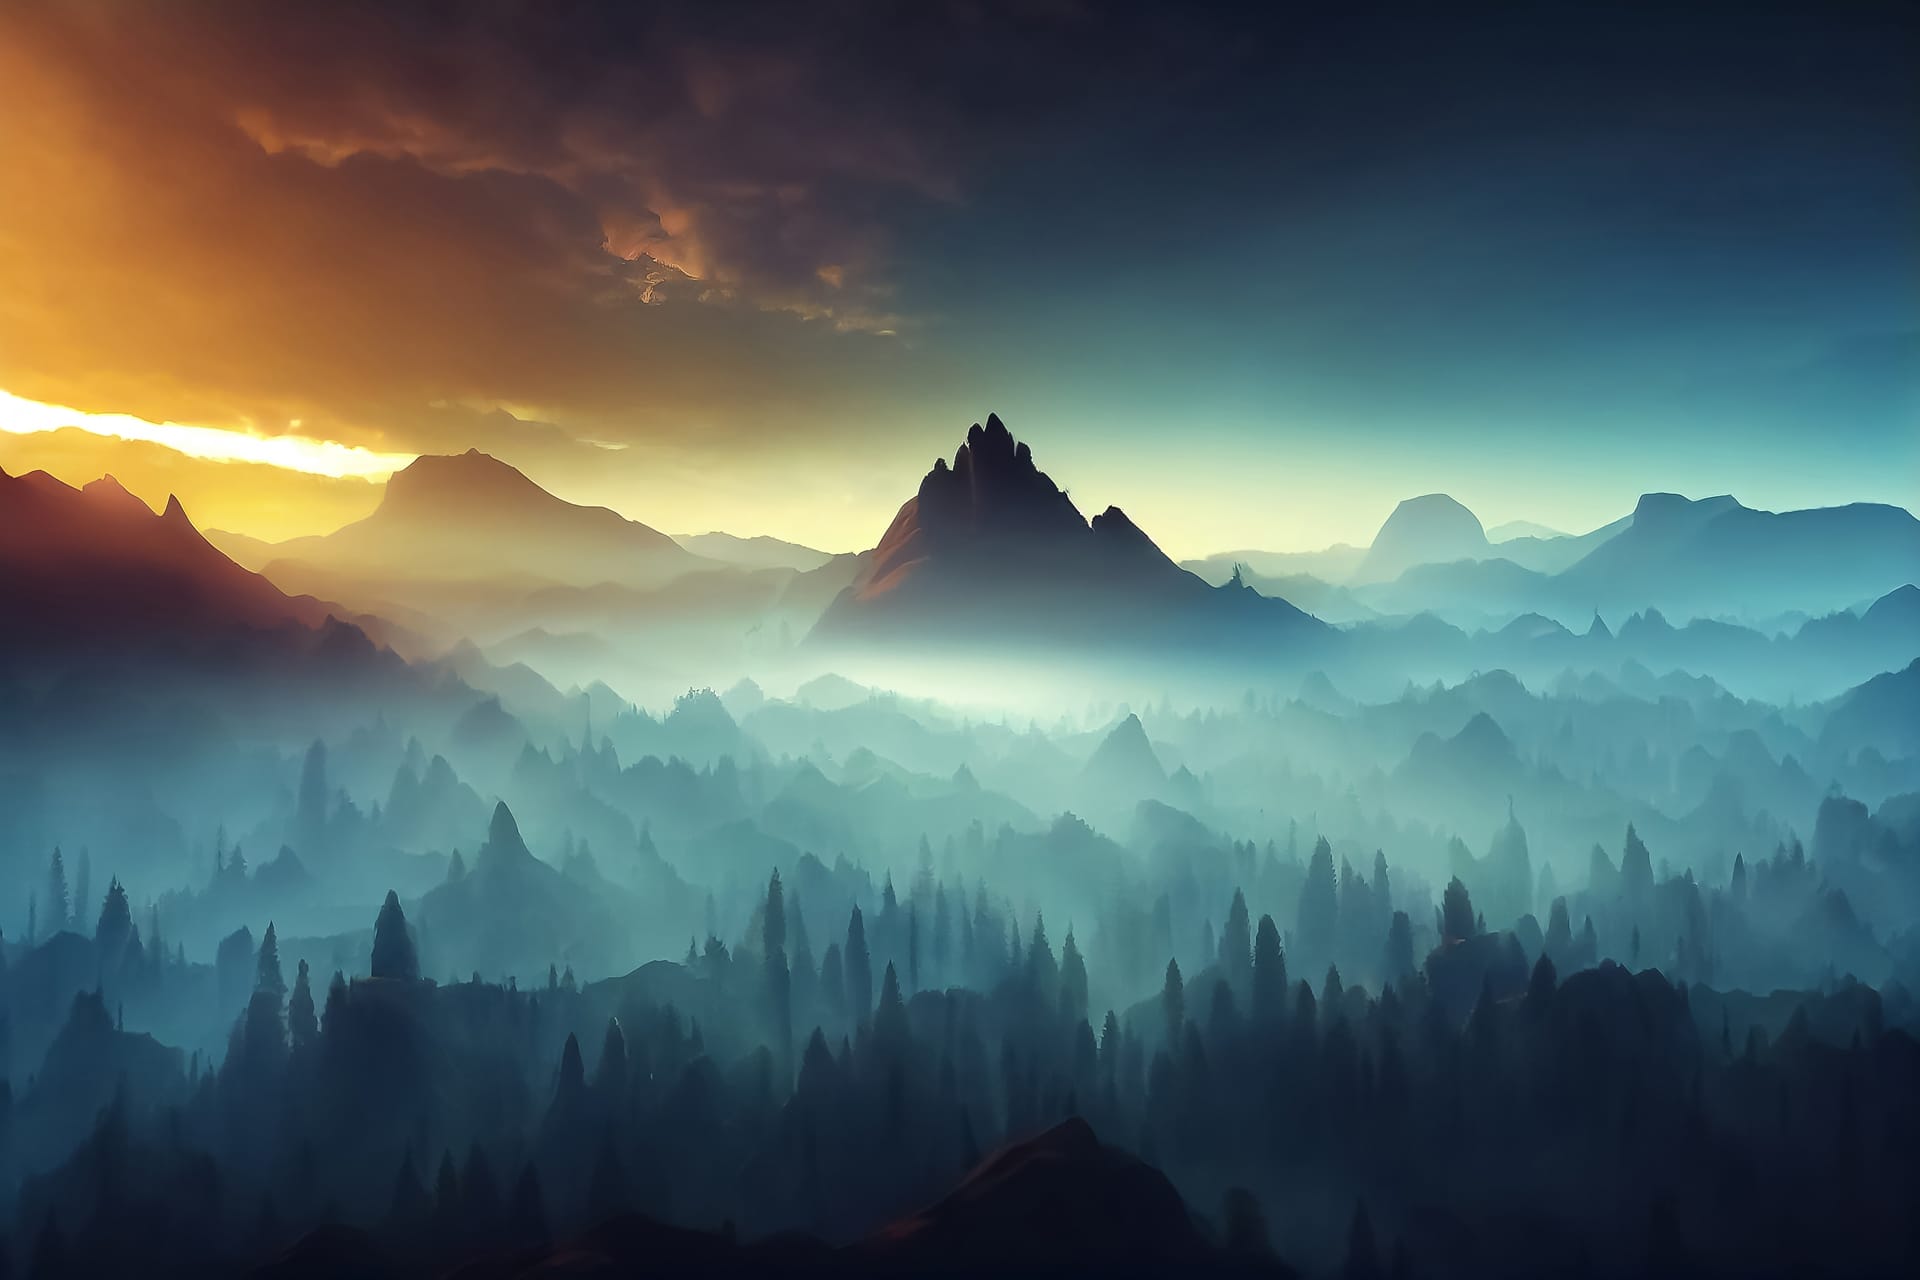 Illustration fantastic landscape peaks mountain sunset image